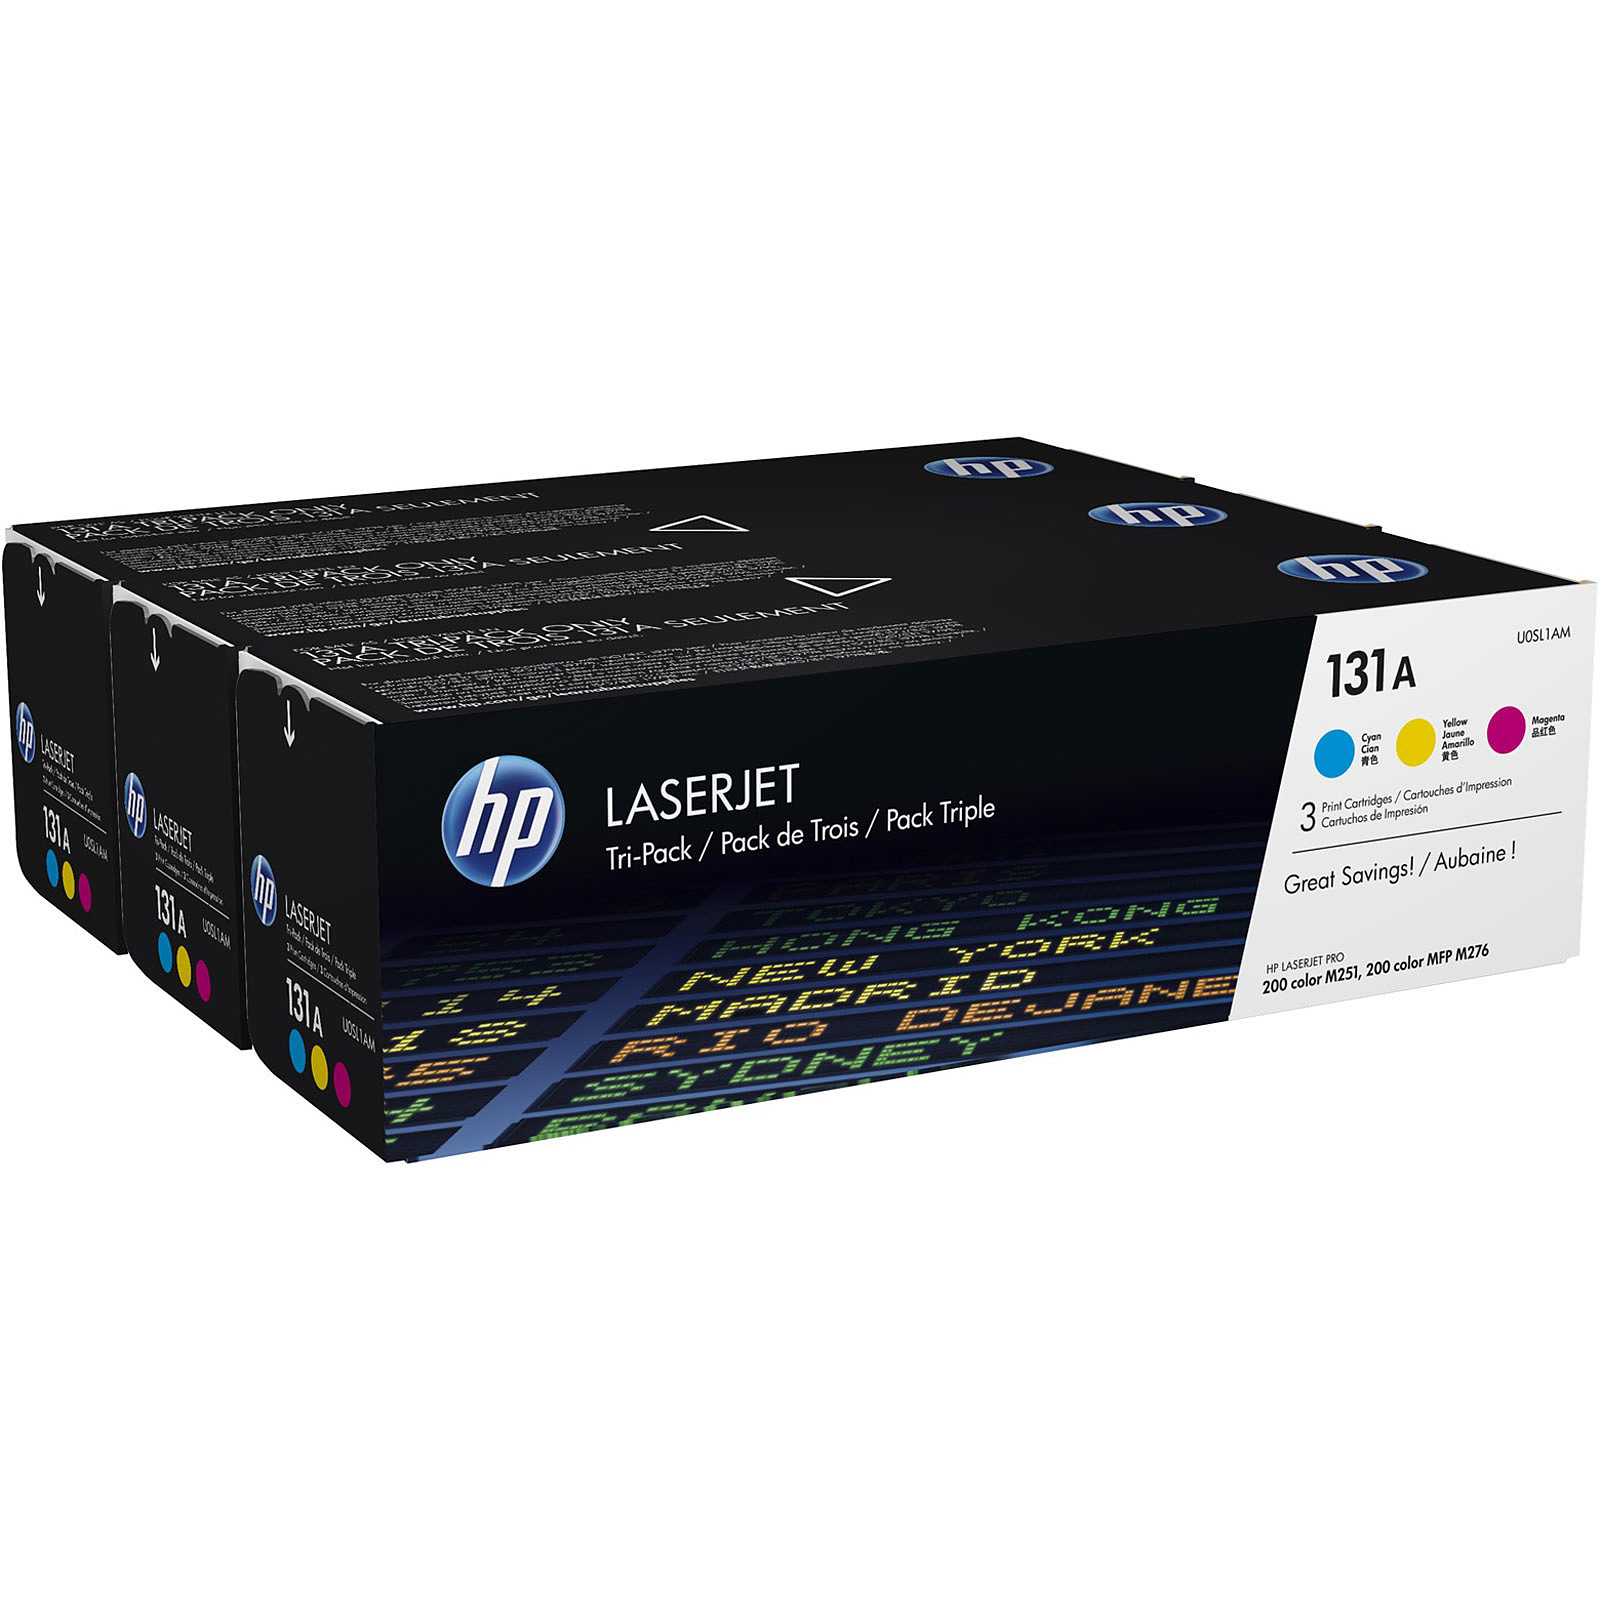 HP 131A Pack de 3 (U0SL1AM) - Cyan, Magenta et Jaune - Toner imprimante HP